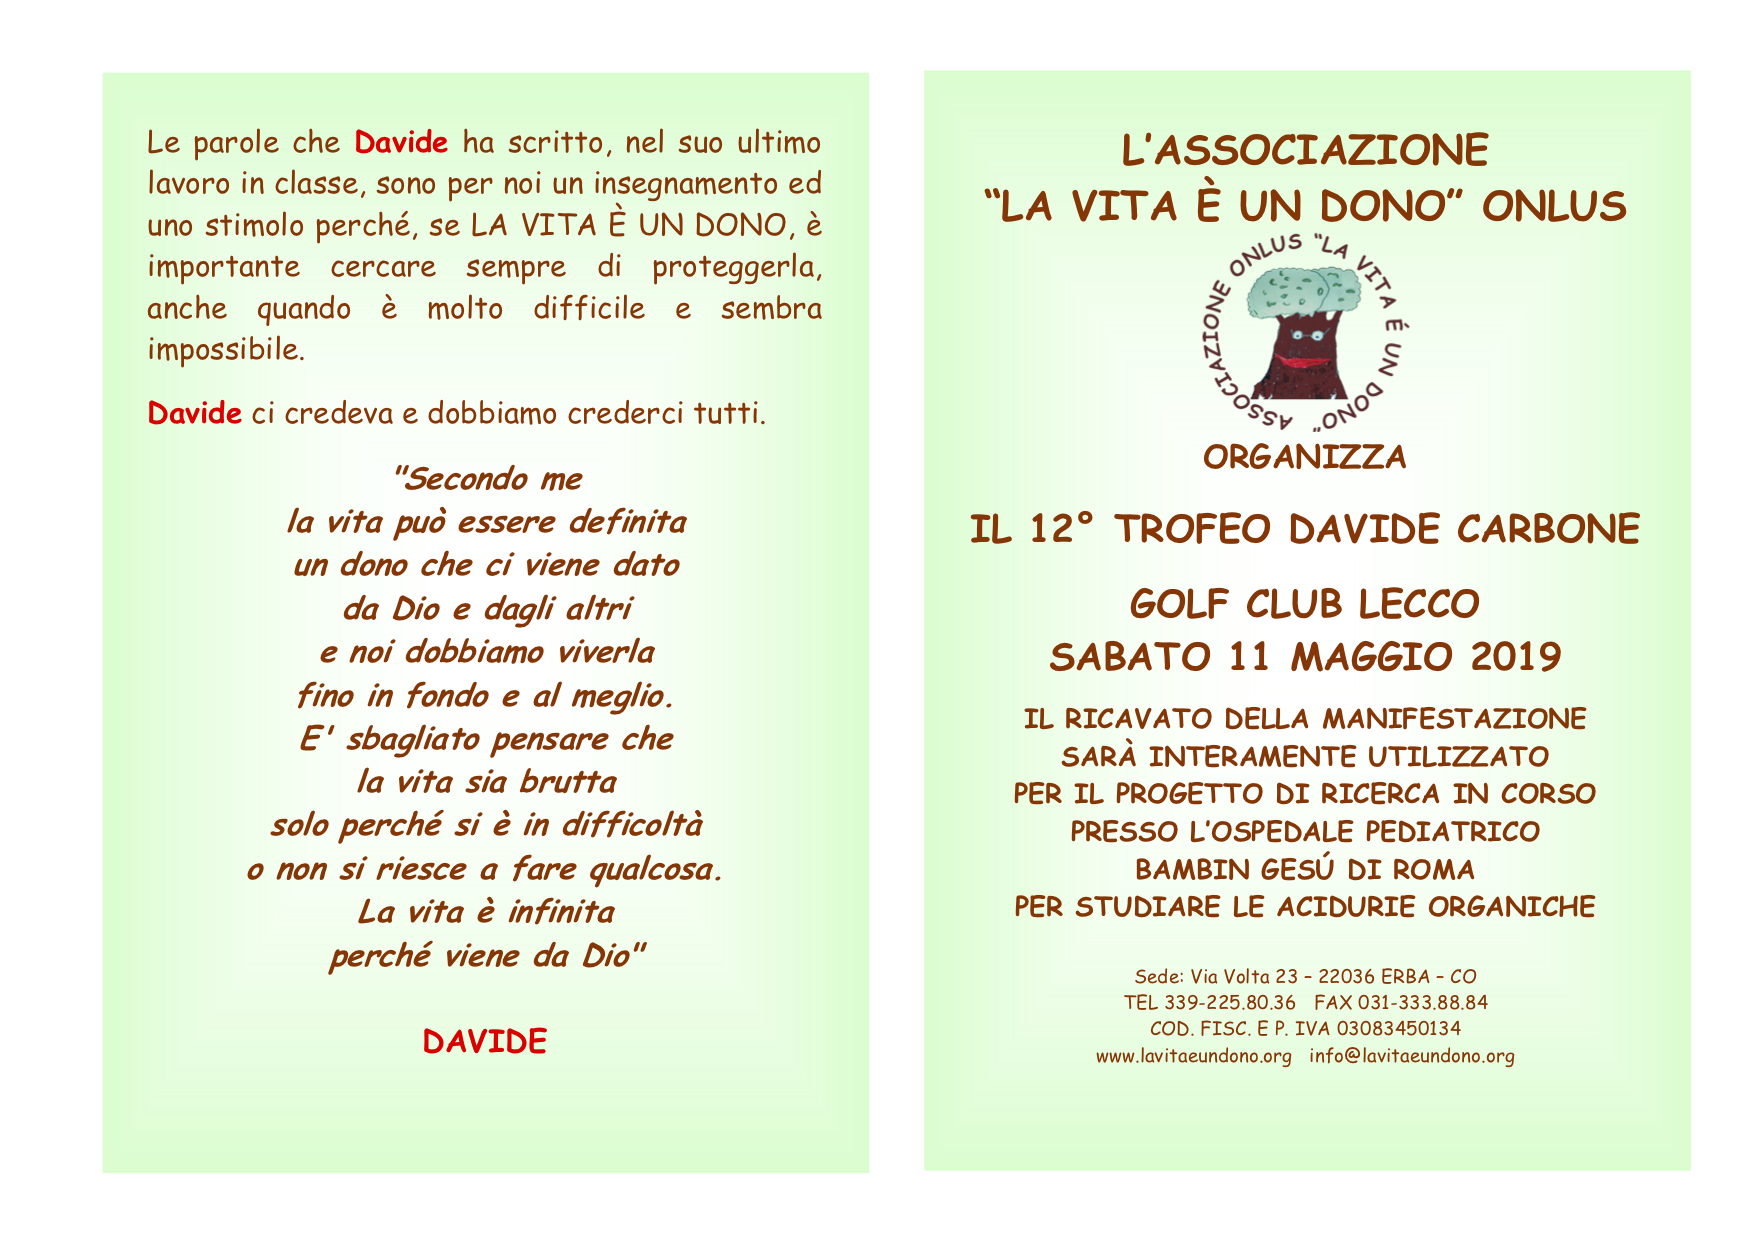 XII Trofeo Davide Carbone al Golf Club Lecco